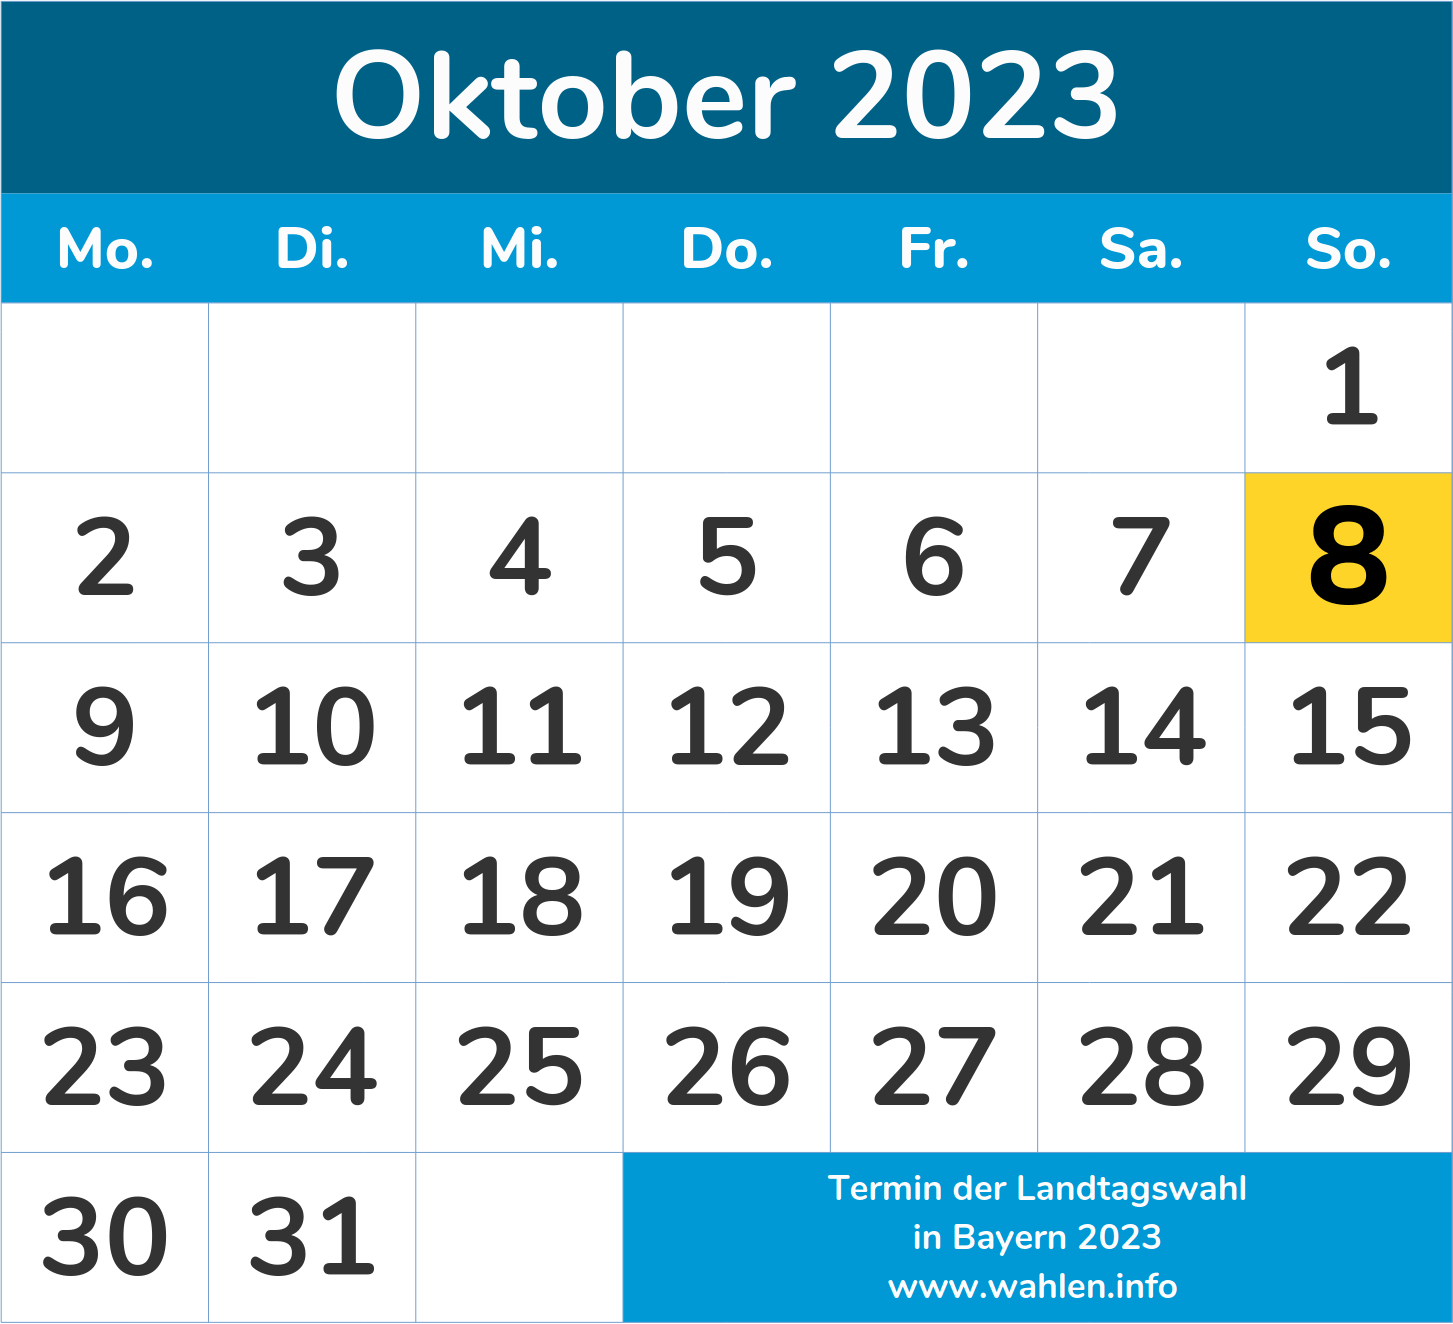 Landtagswahl in Bayern (Termin, Datum, Wahltermin)